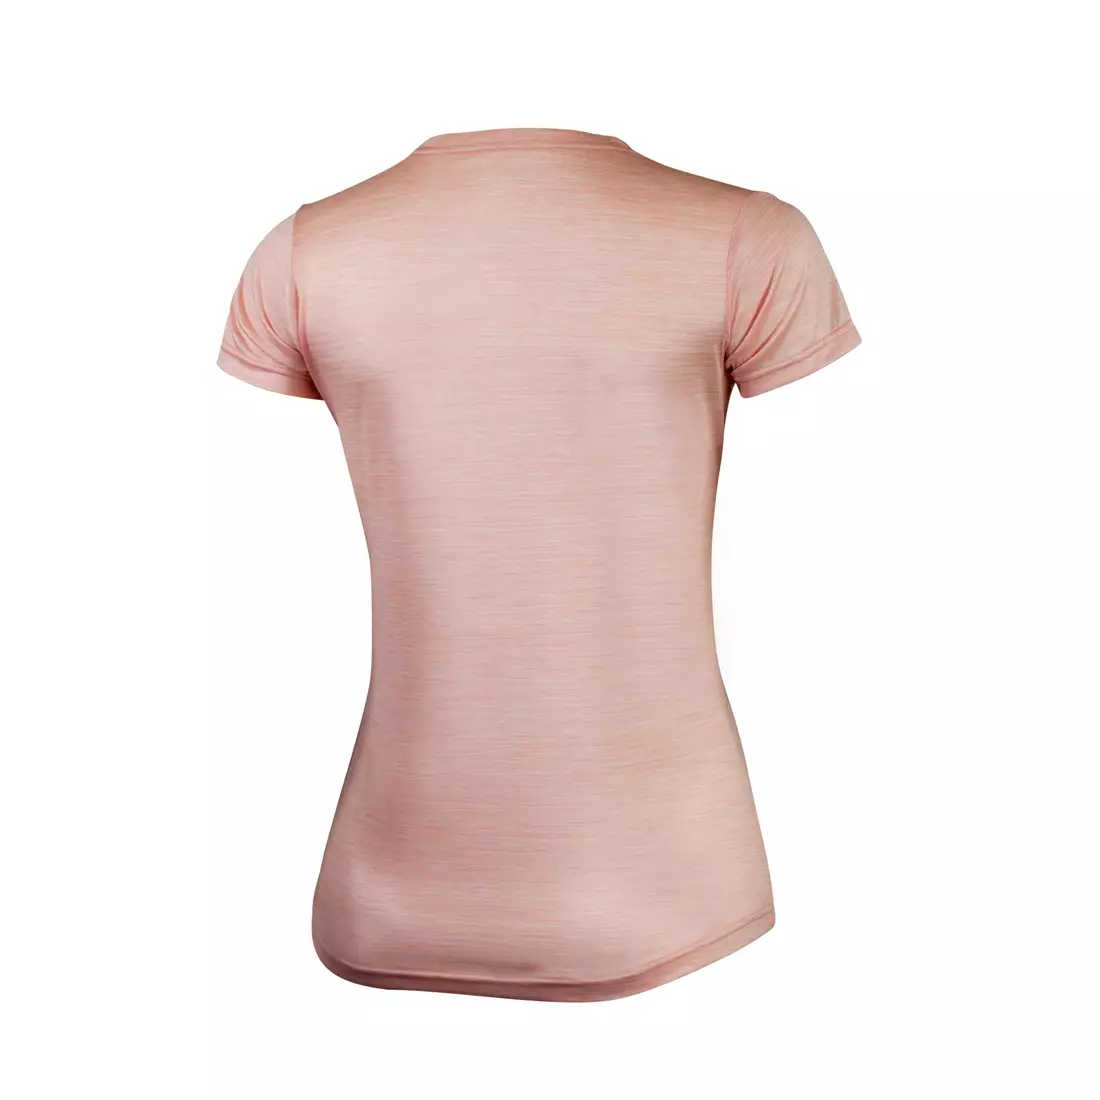 ROGELLI RUN DESIRE 840.264 - Women's running T-shirt K/R, pink-coral